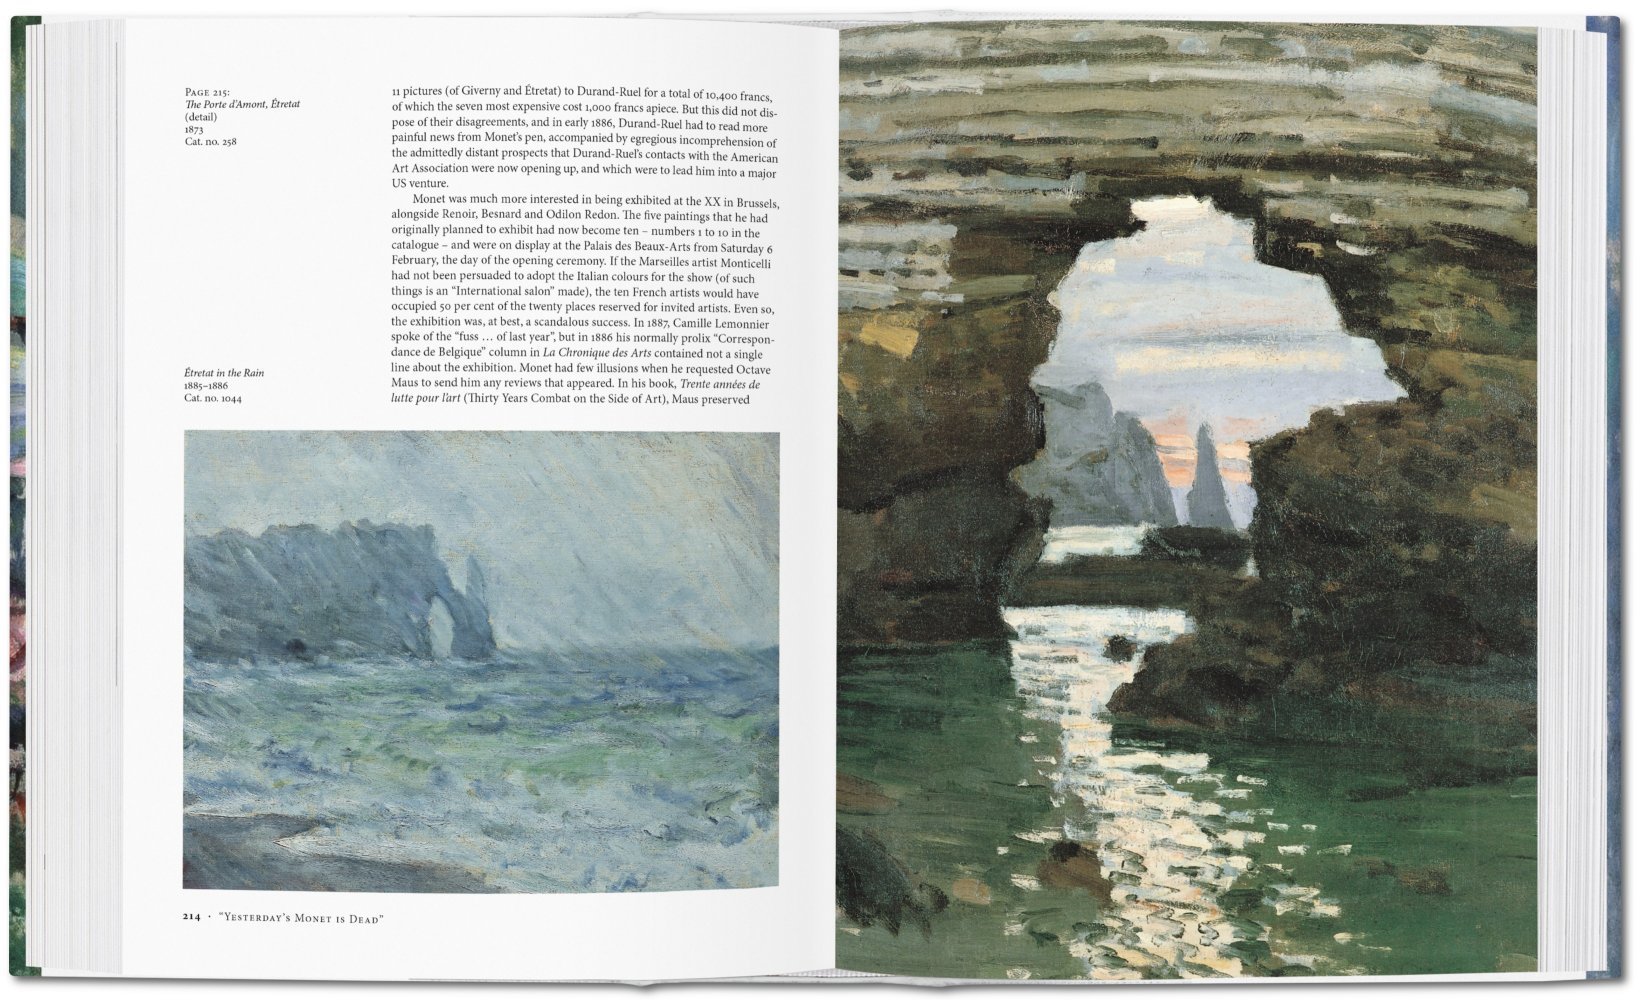 Monet | Der Triumph des Impressionismus